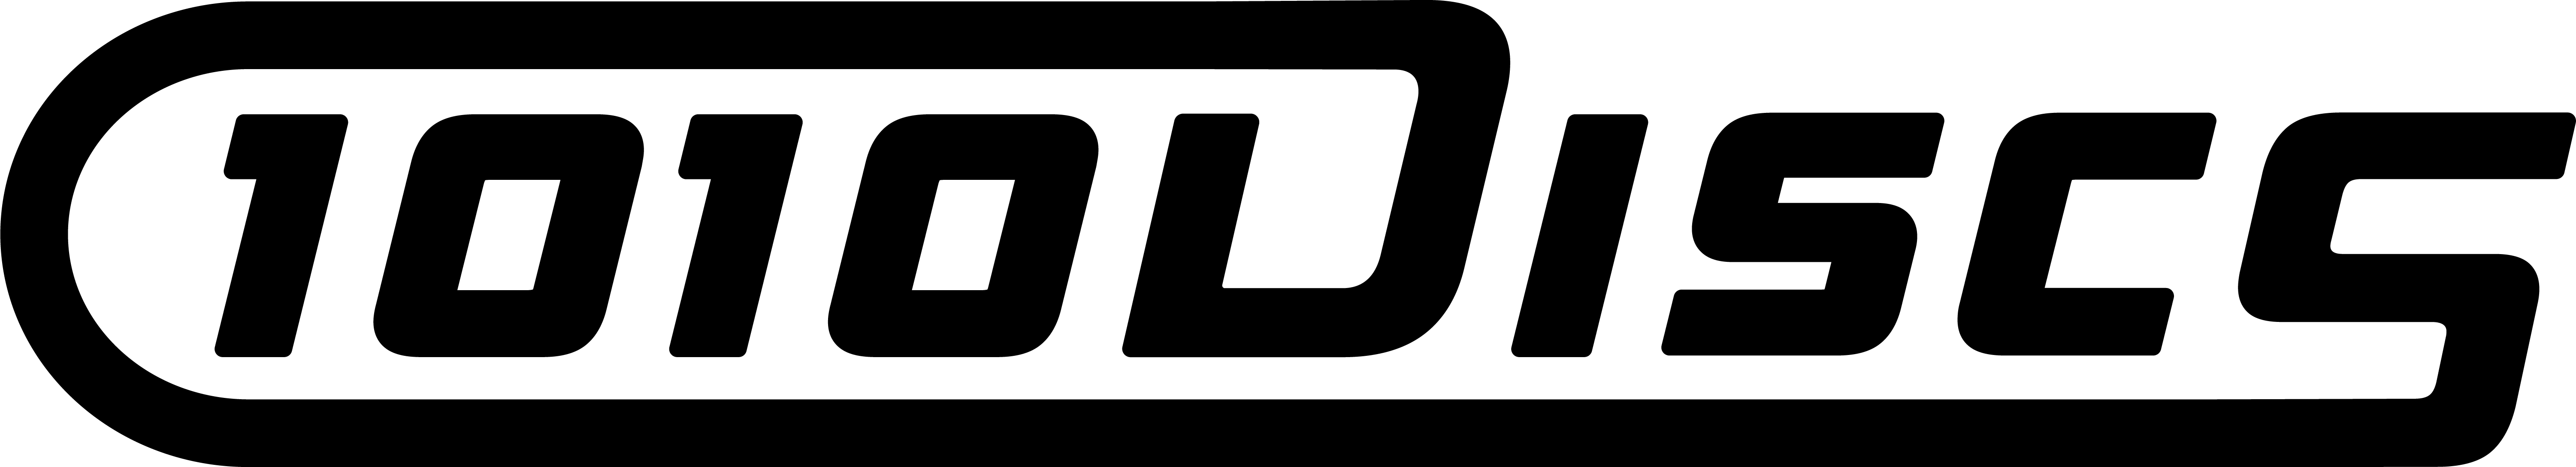 1010 Discs Logo